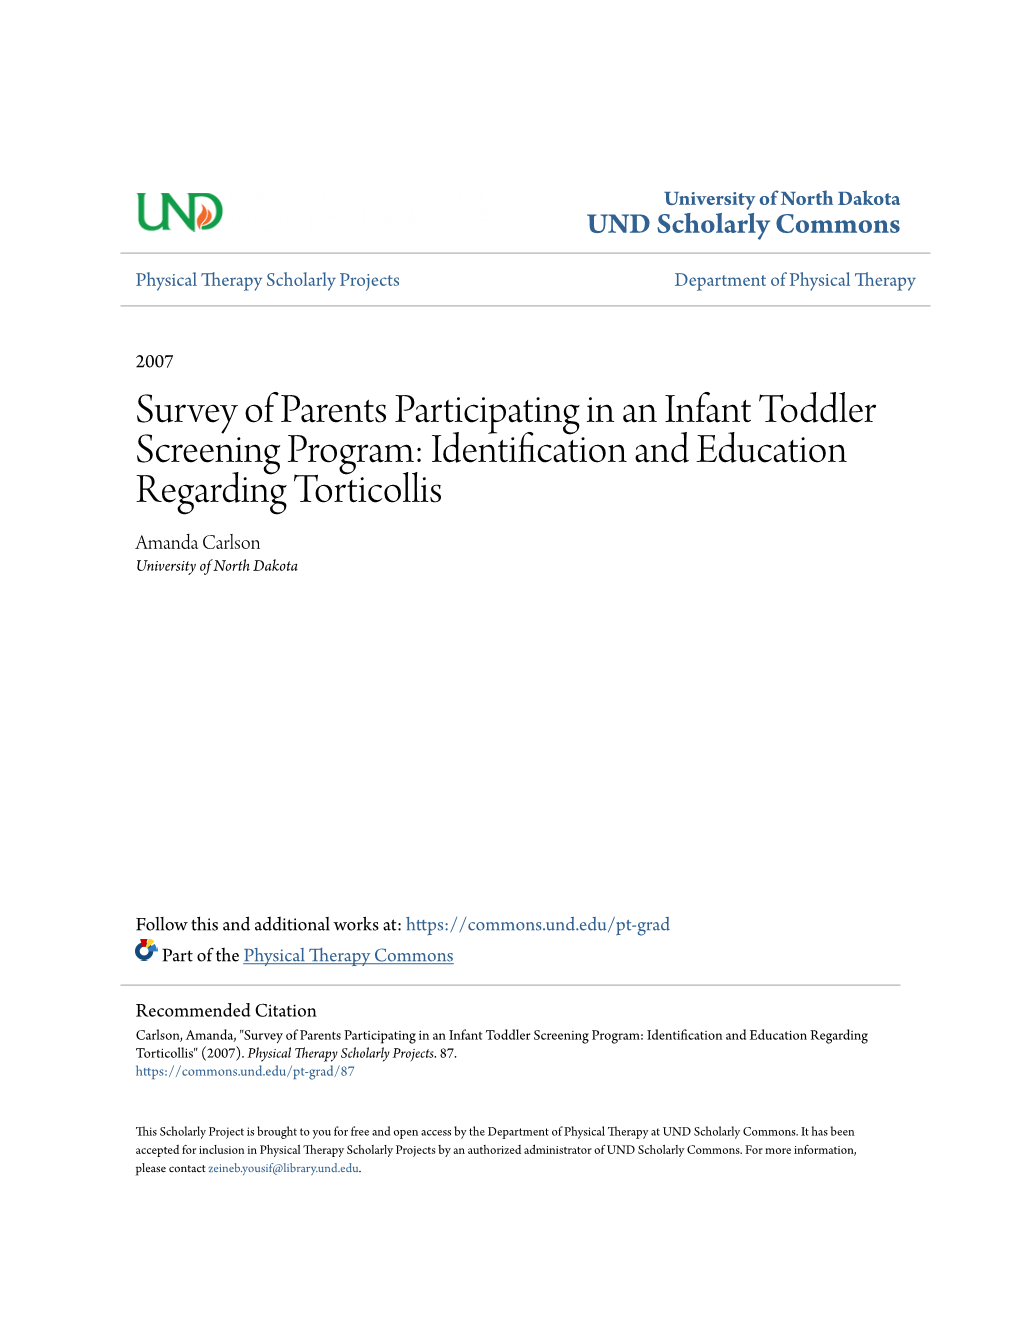 Survey of Parents Participating in an Infant Toddler Screening Program: Identification and Education Regarding Torticollis Amanda Carlson University of North Dakota